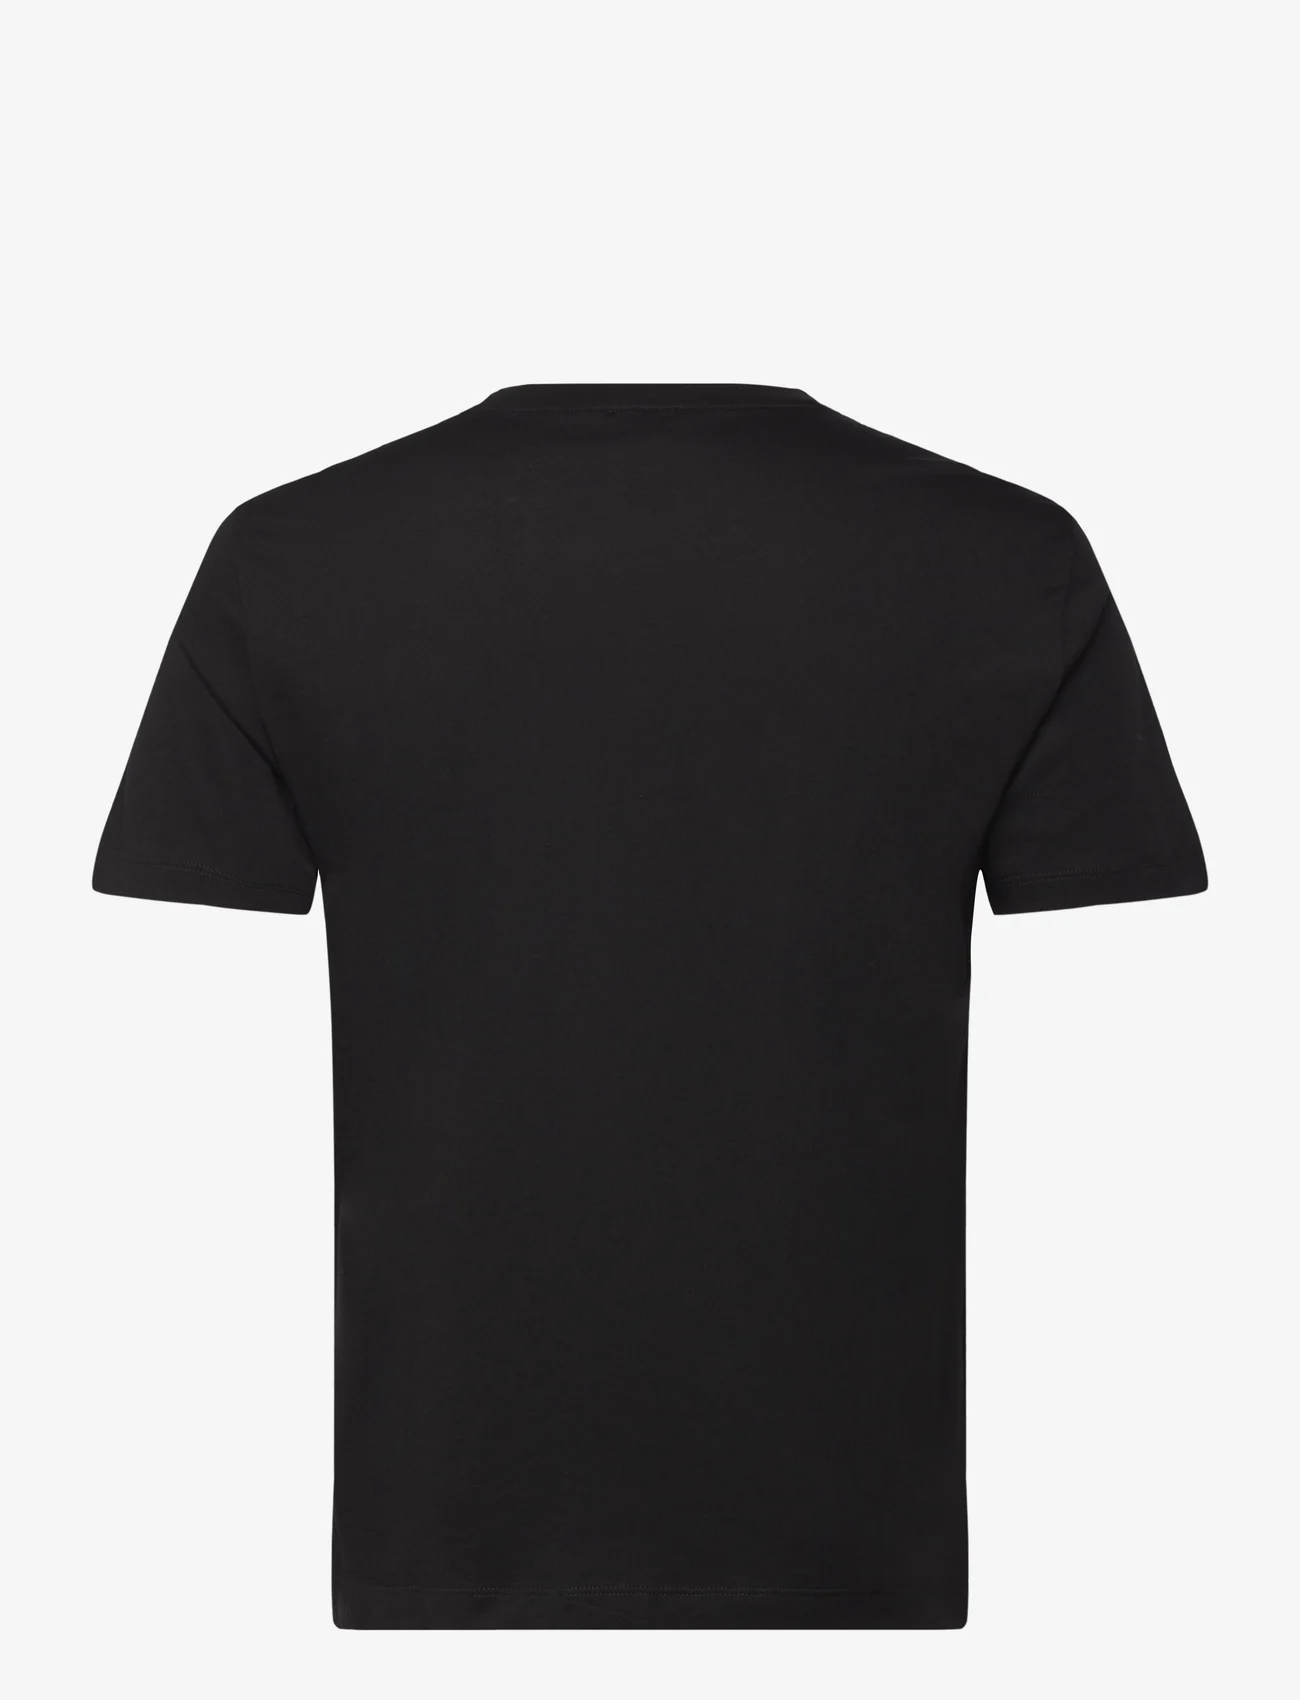 EA7 - T-SHIRT - t-shirts - black - 1